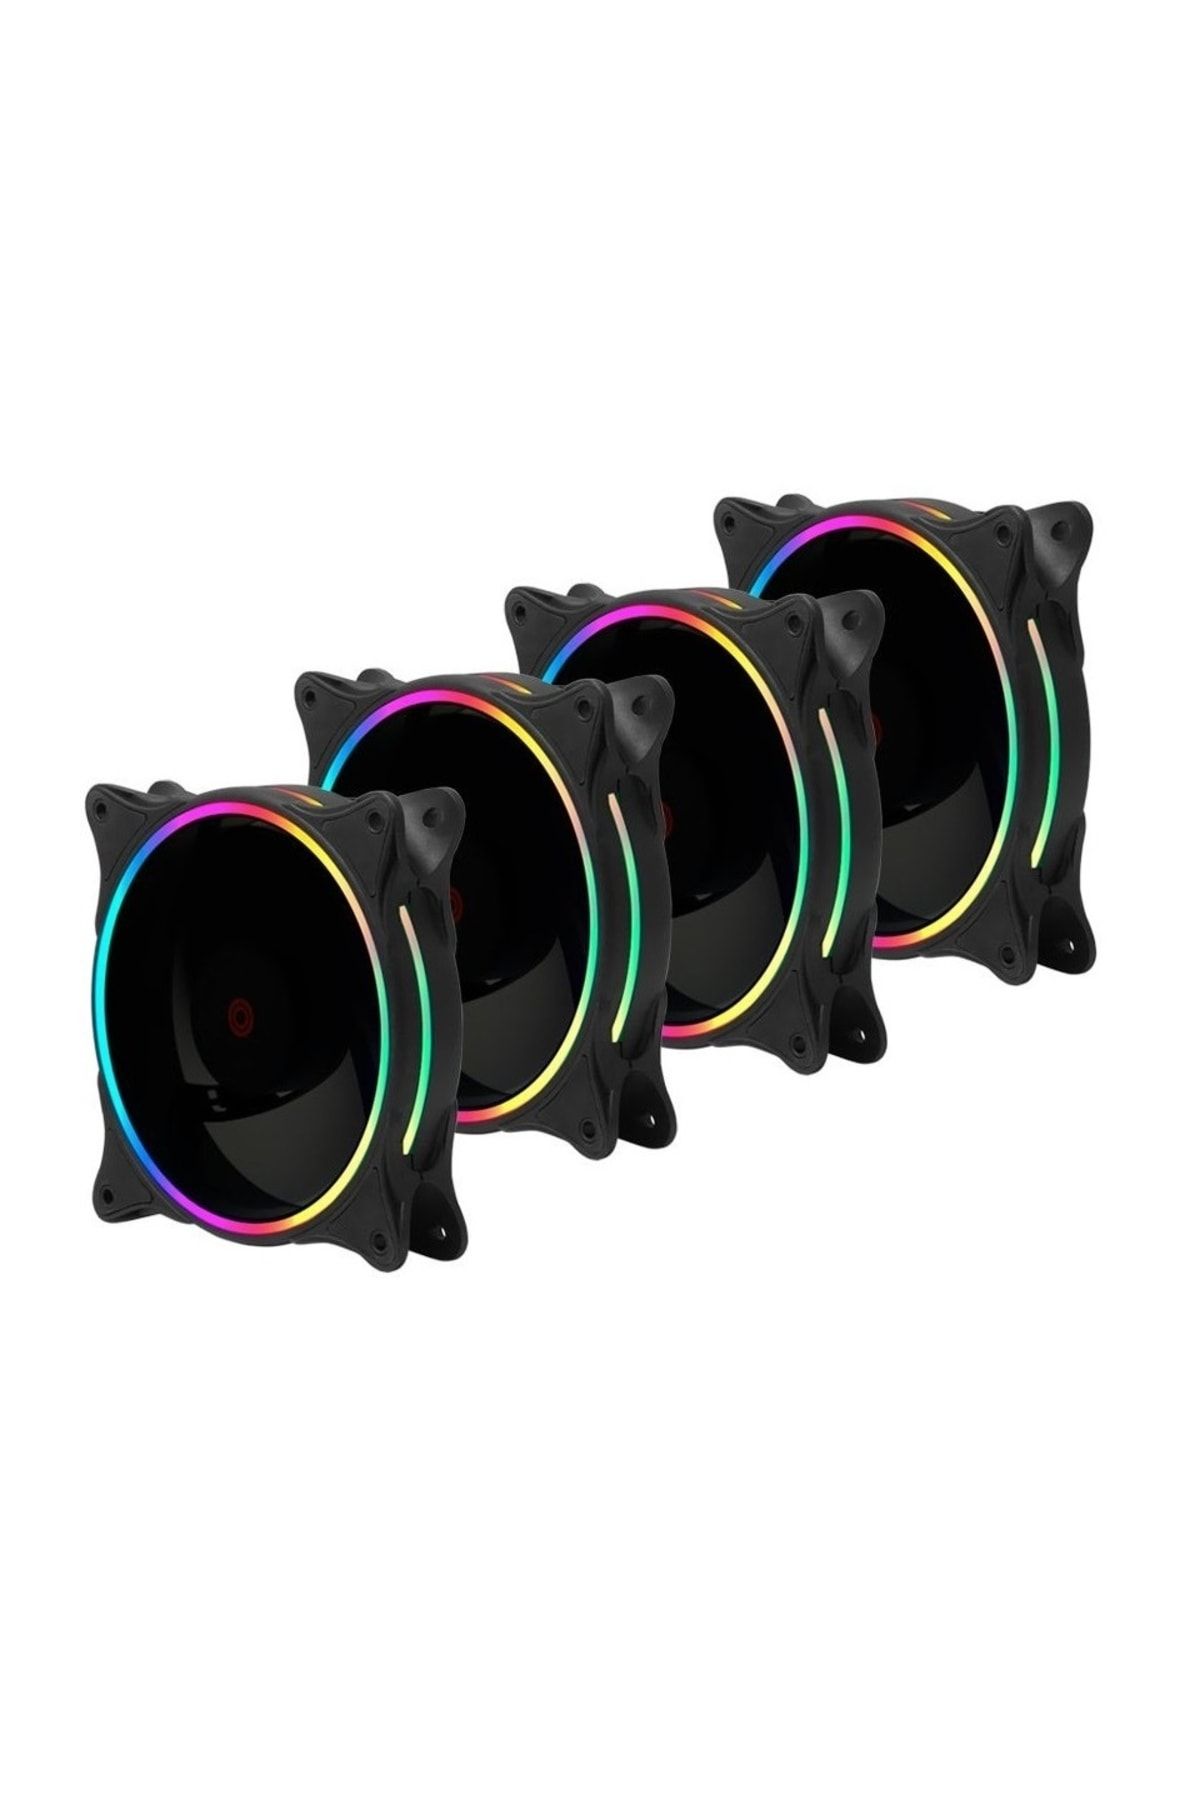 Frisby Fcl-f1276c 4x120mm Dual Ring 4lü Rainbow Fan Seti Pc Kasa Fanı